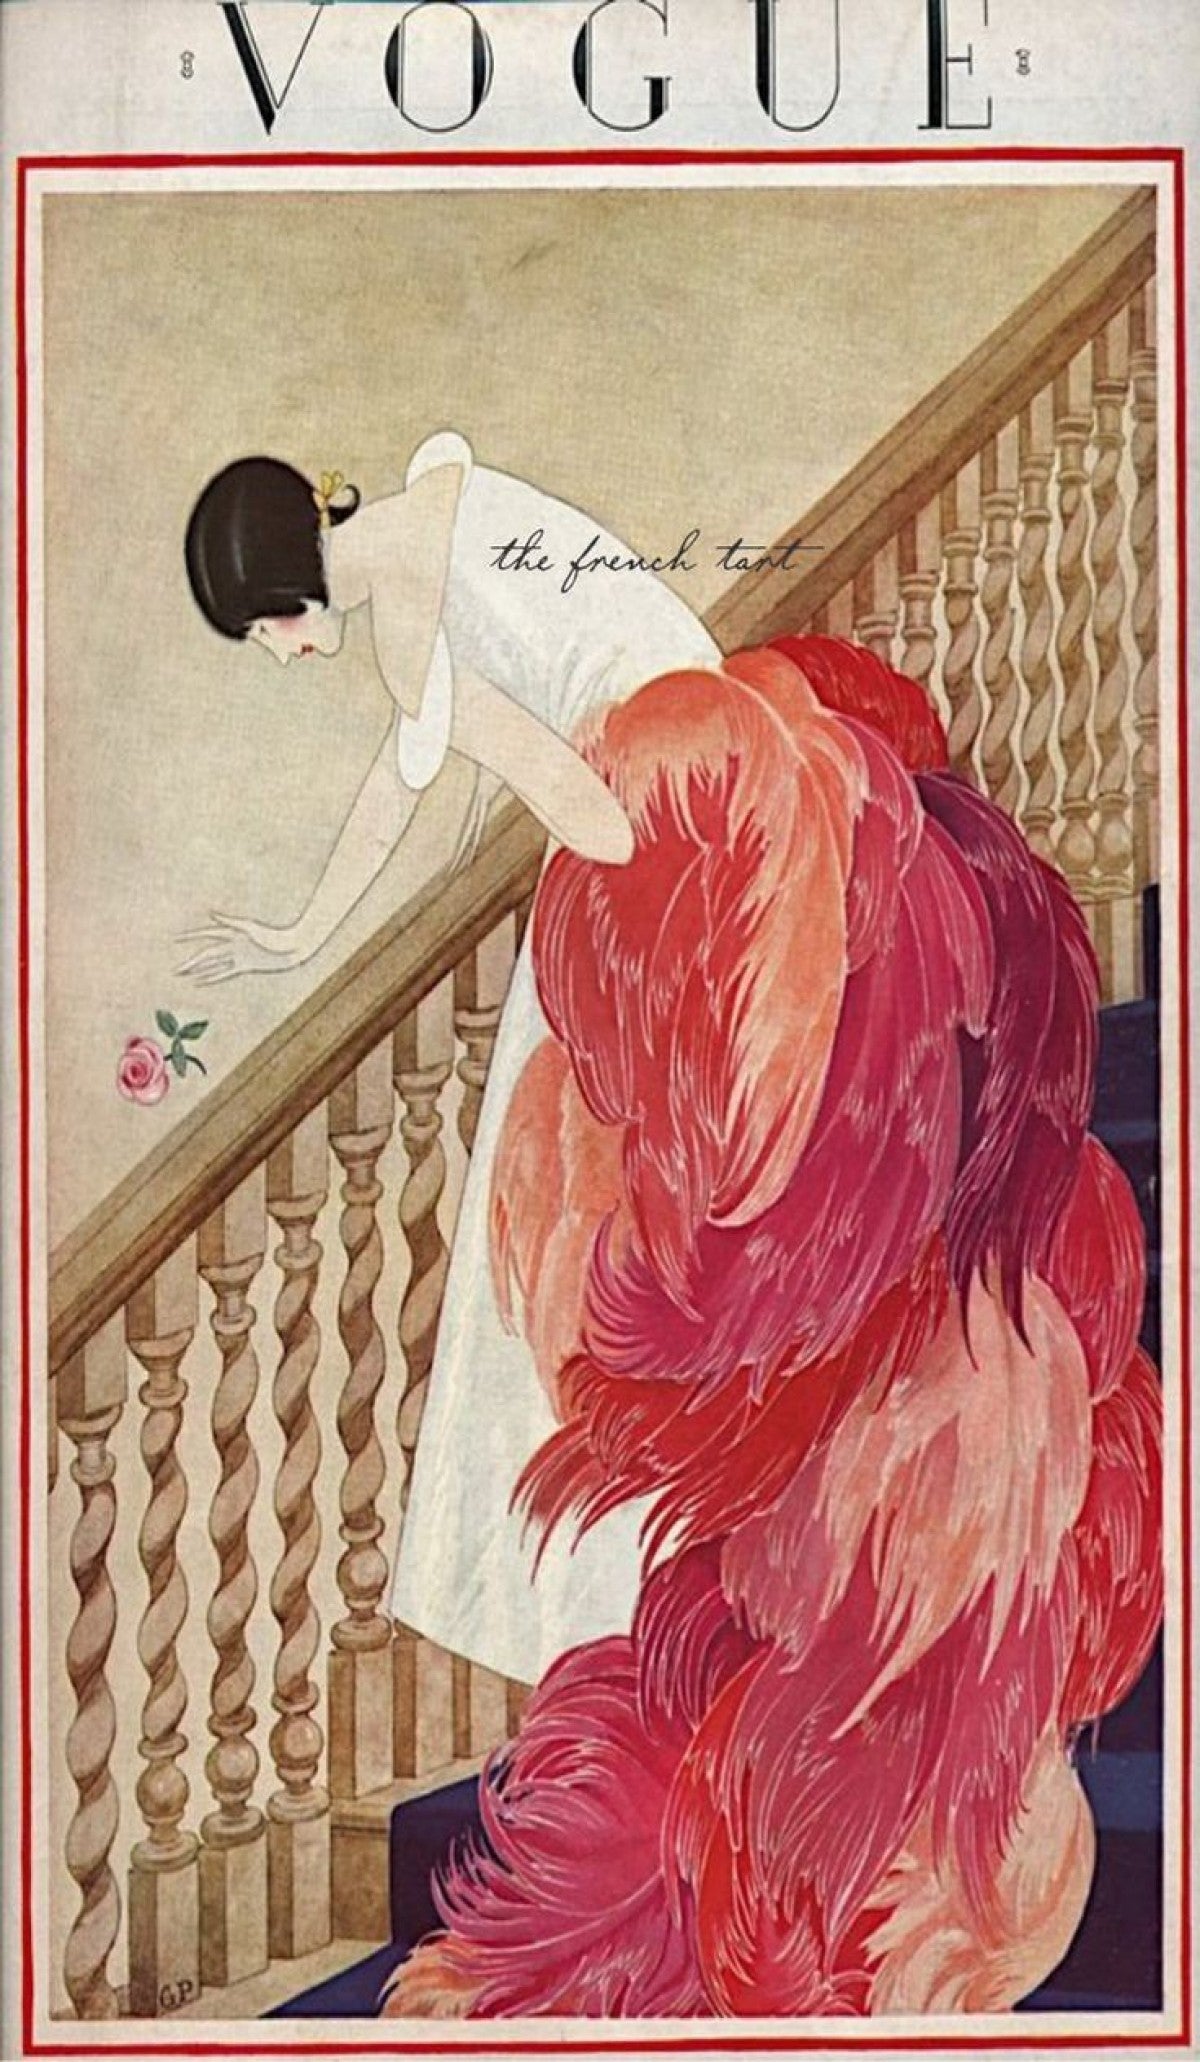 A VINTAGE VOGUE MAGAZINE COVER OF A WOMAN